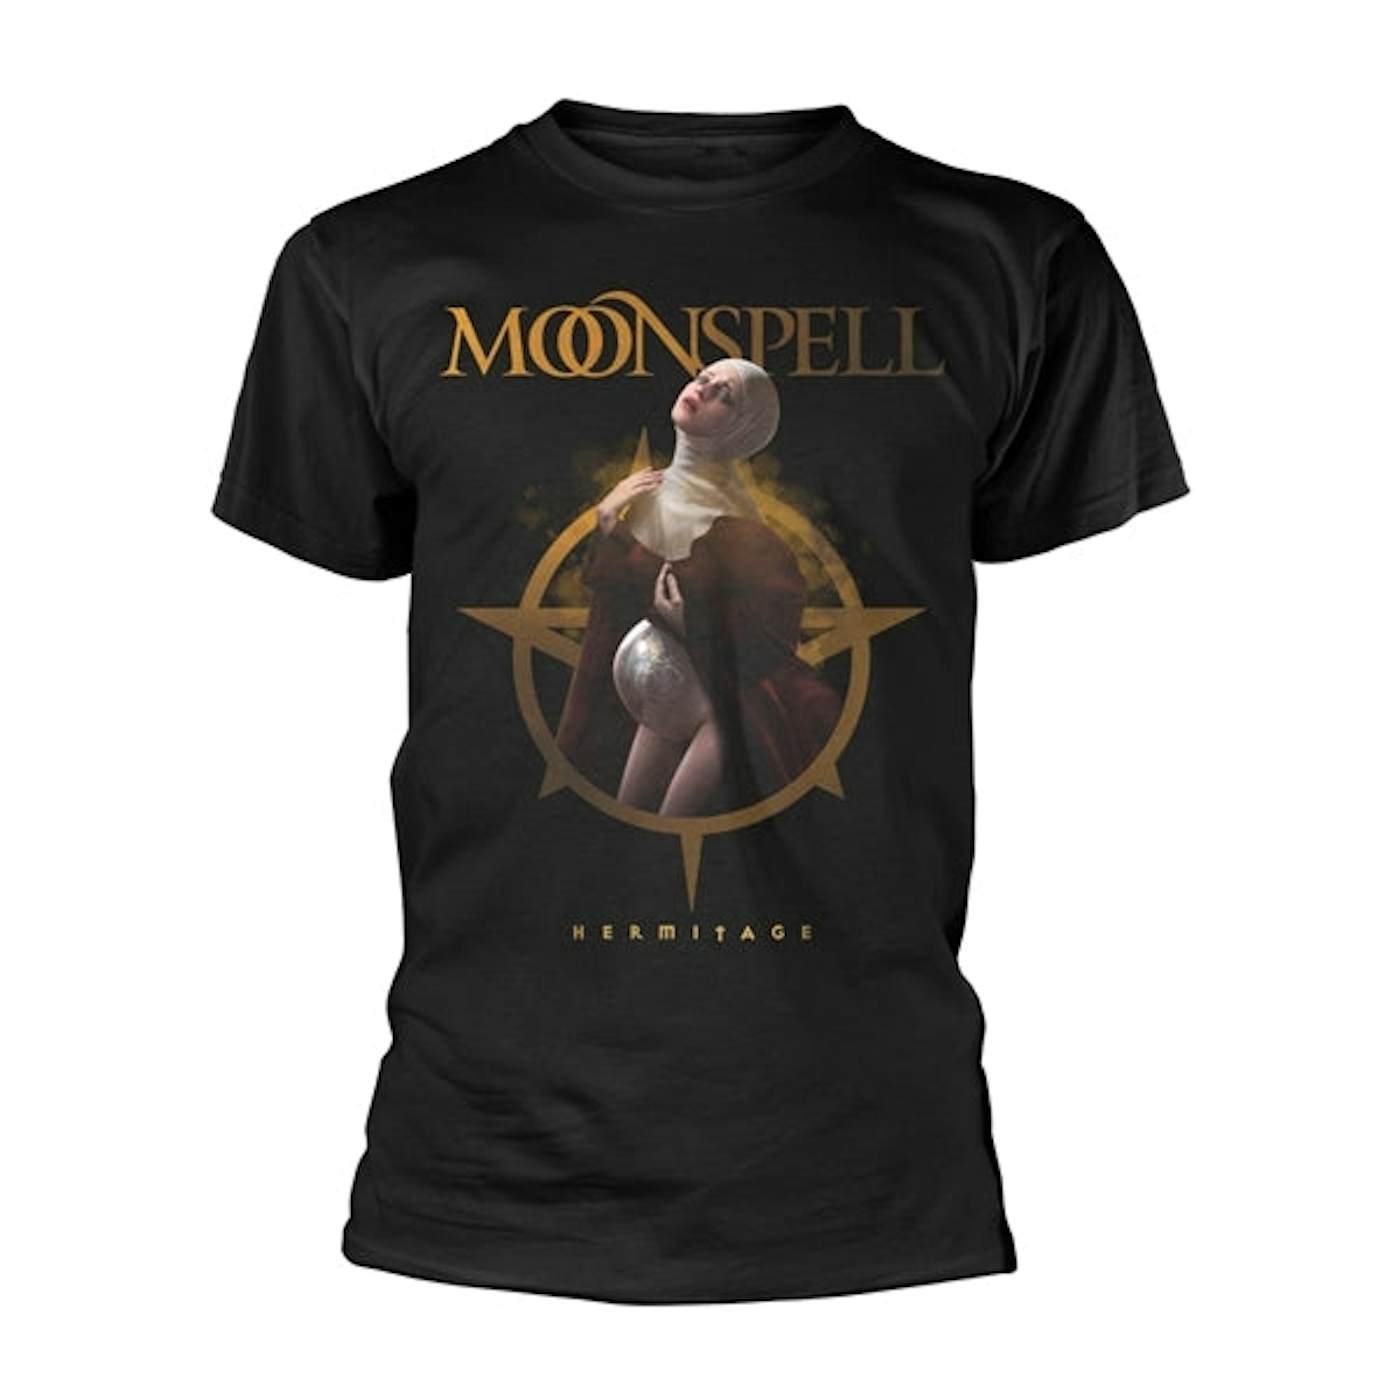 Moonspell T Shirt - Hermitage